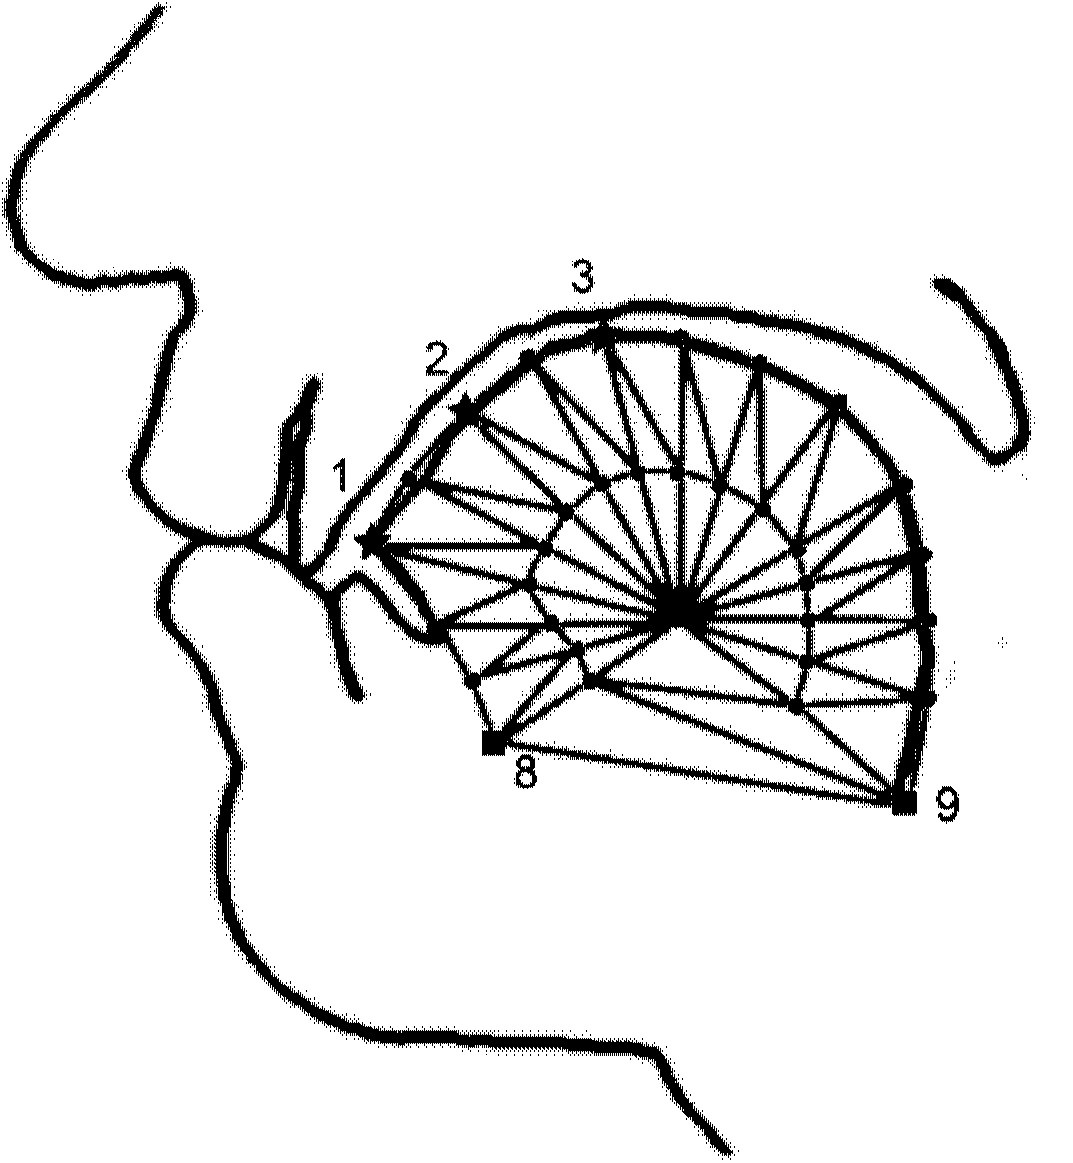 Method for generating lattice animation of vocal organs